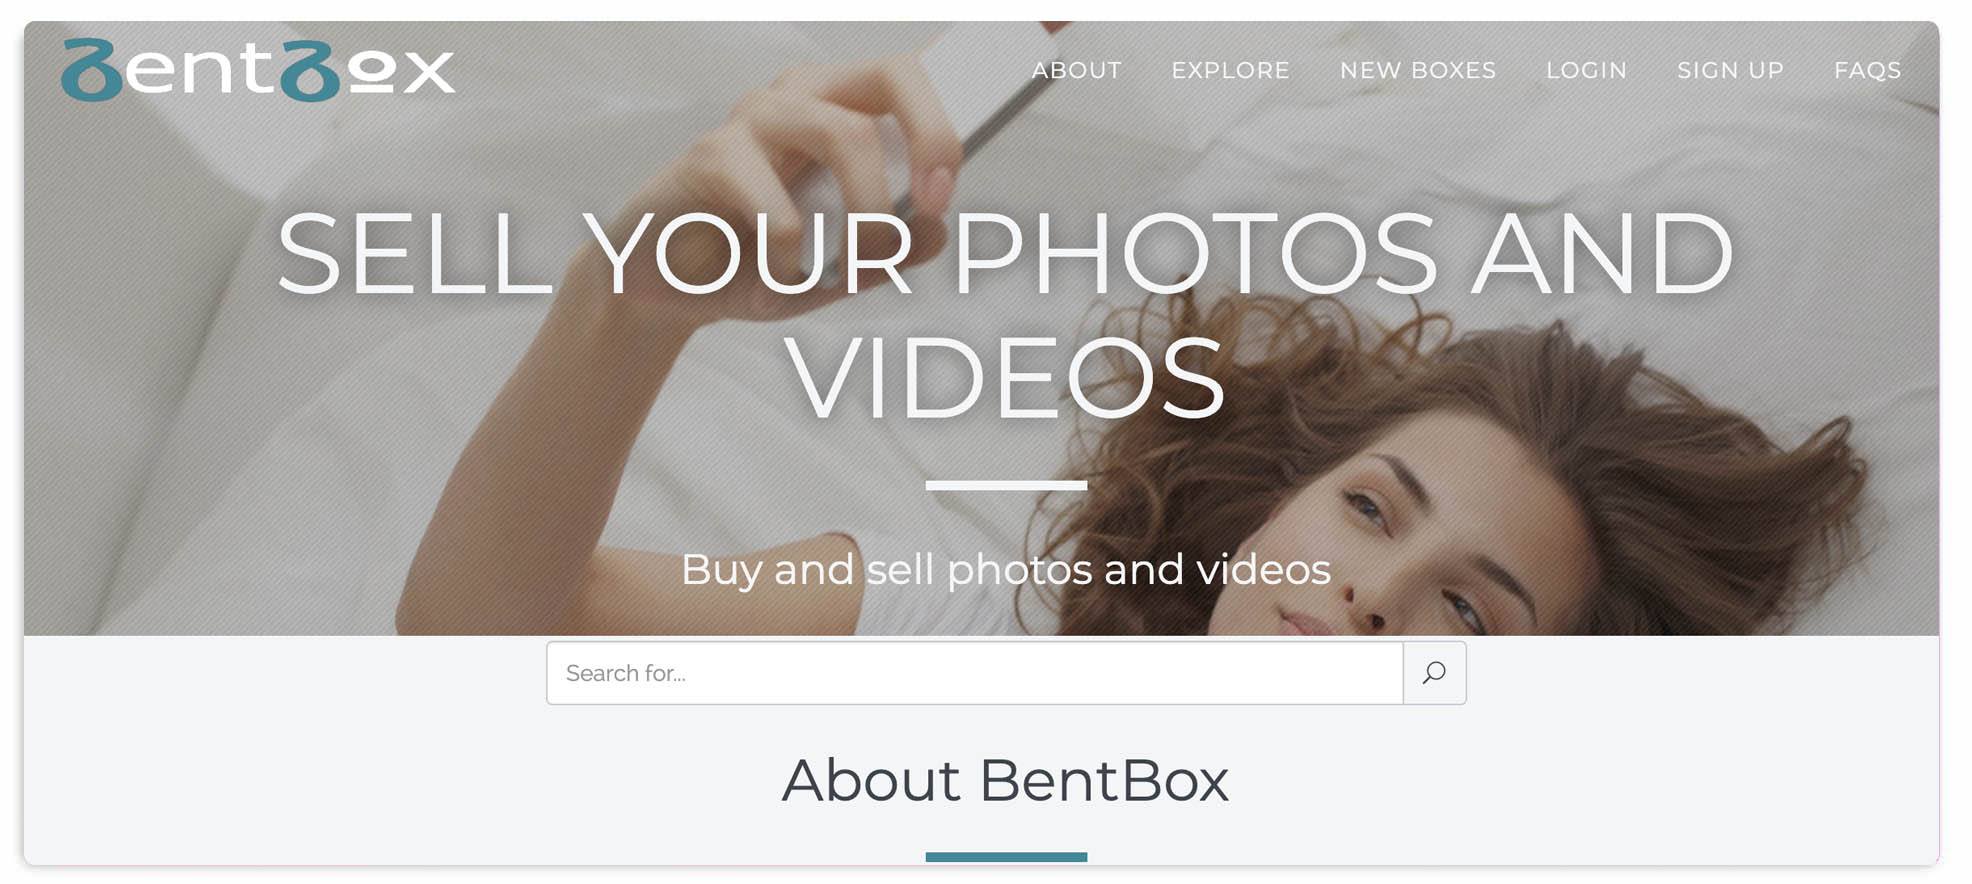 BentBox Review Site